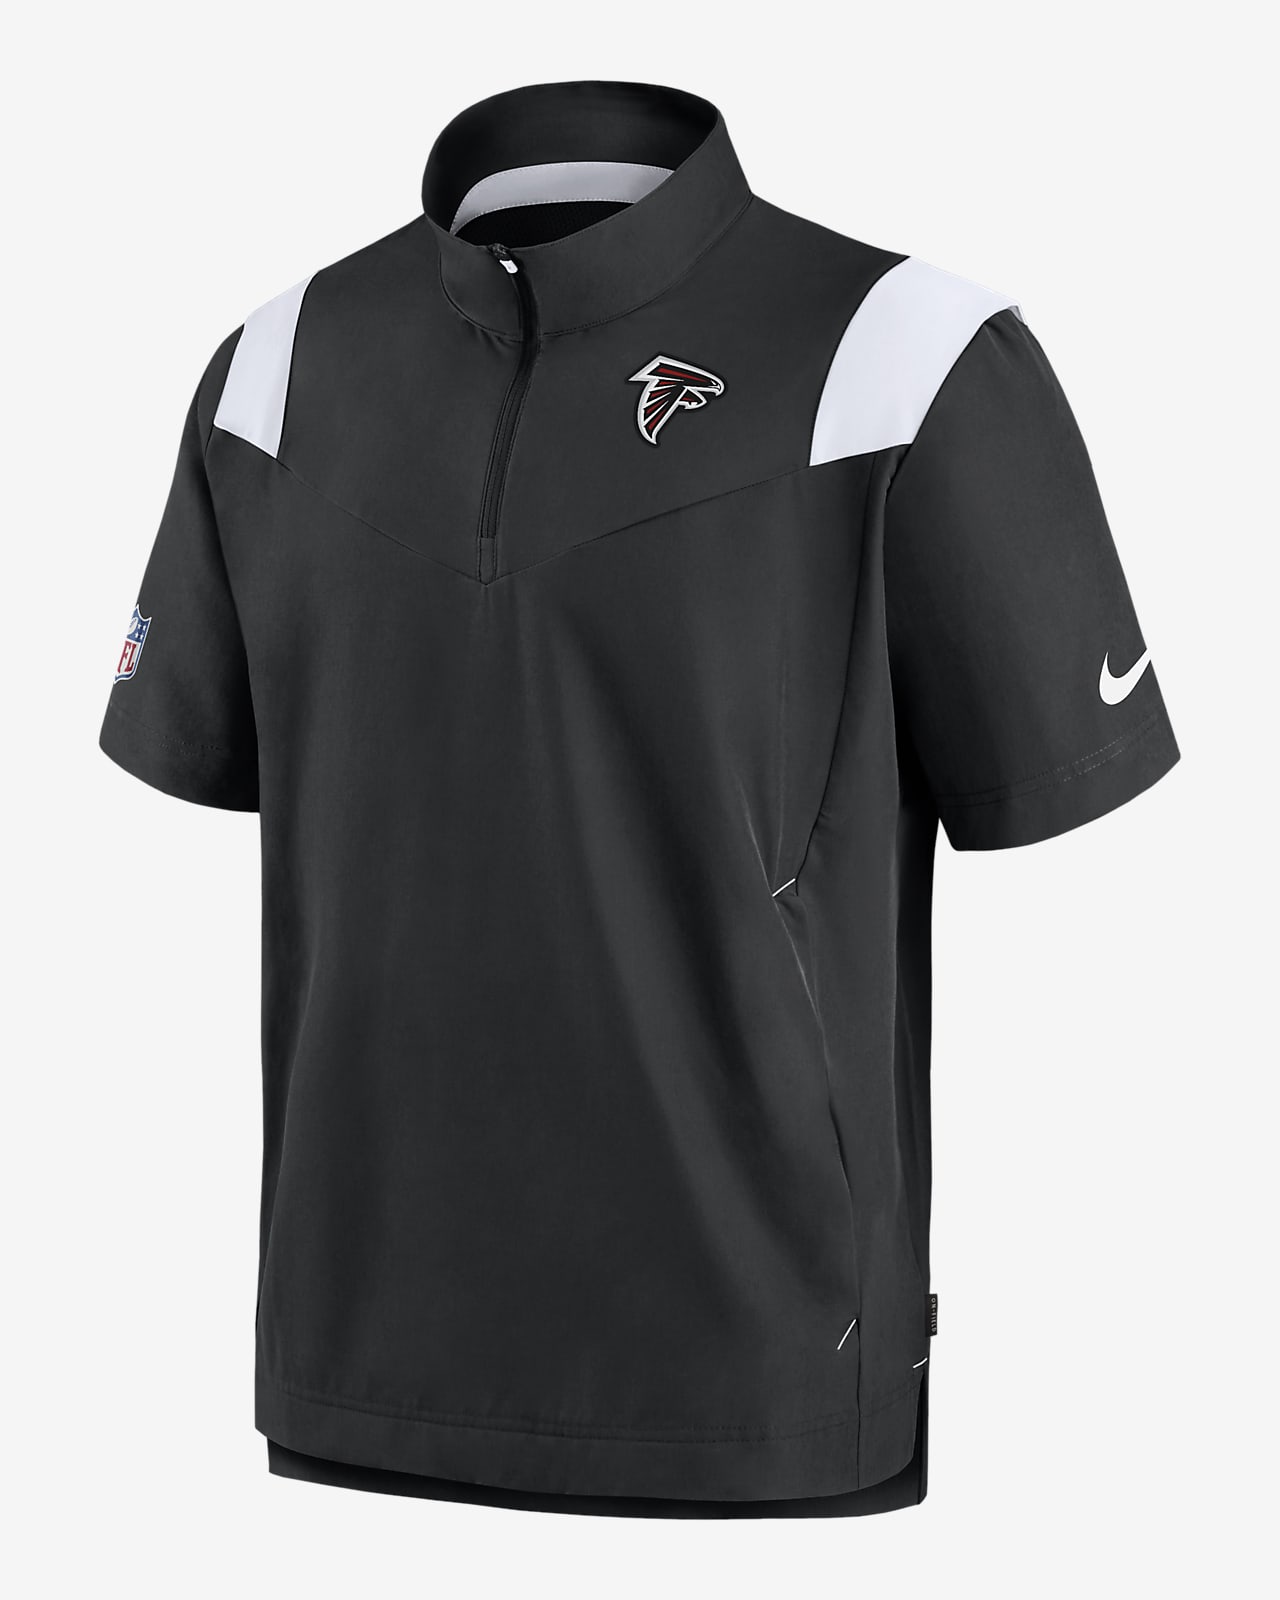 Nike Sideline Coach Lockup (NFL Atlanta Falcons) Men's Short-Sleeve Jacket.  